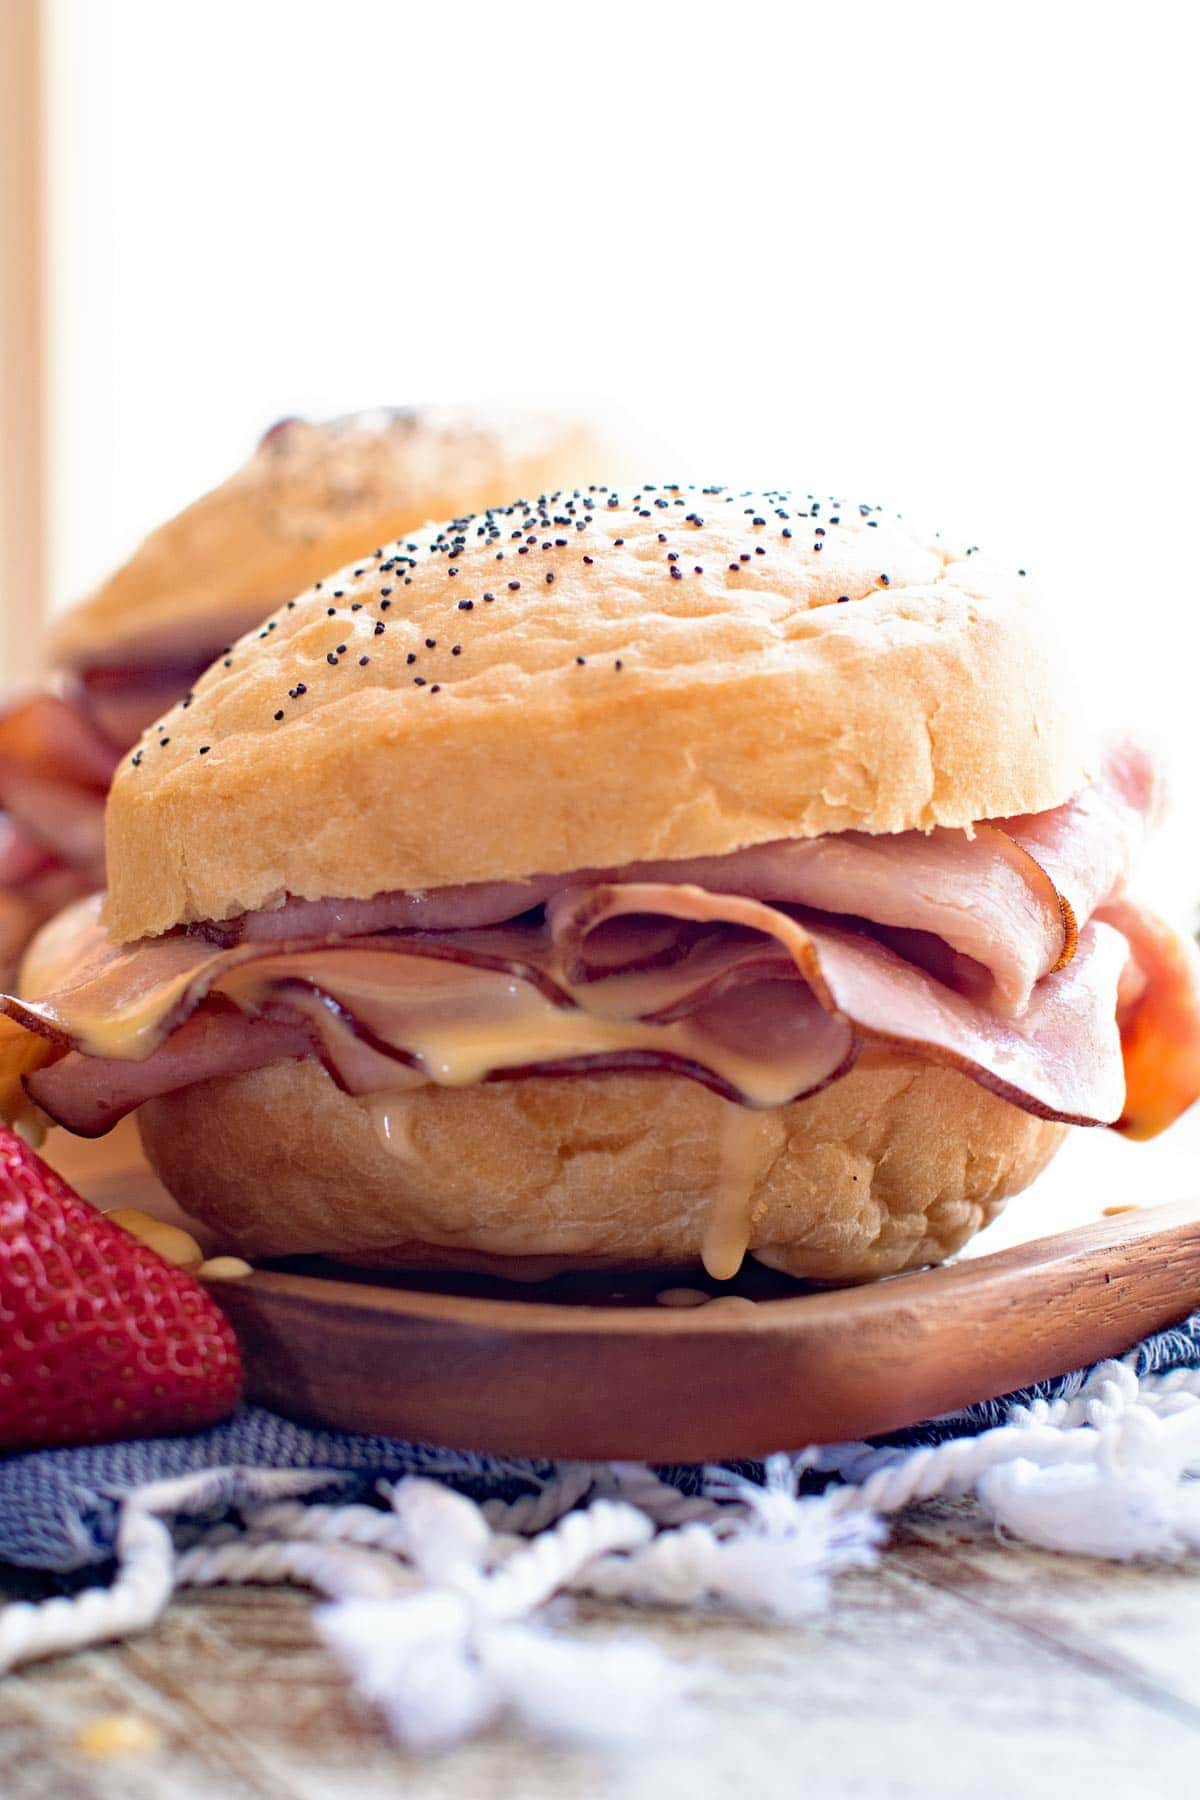 Hot Ham & Cheese Sandwich on Plate